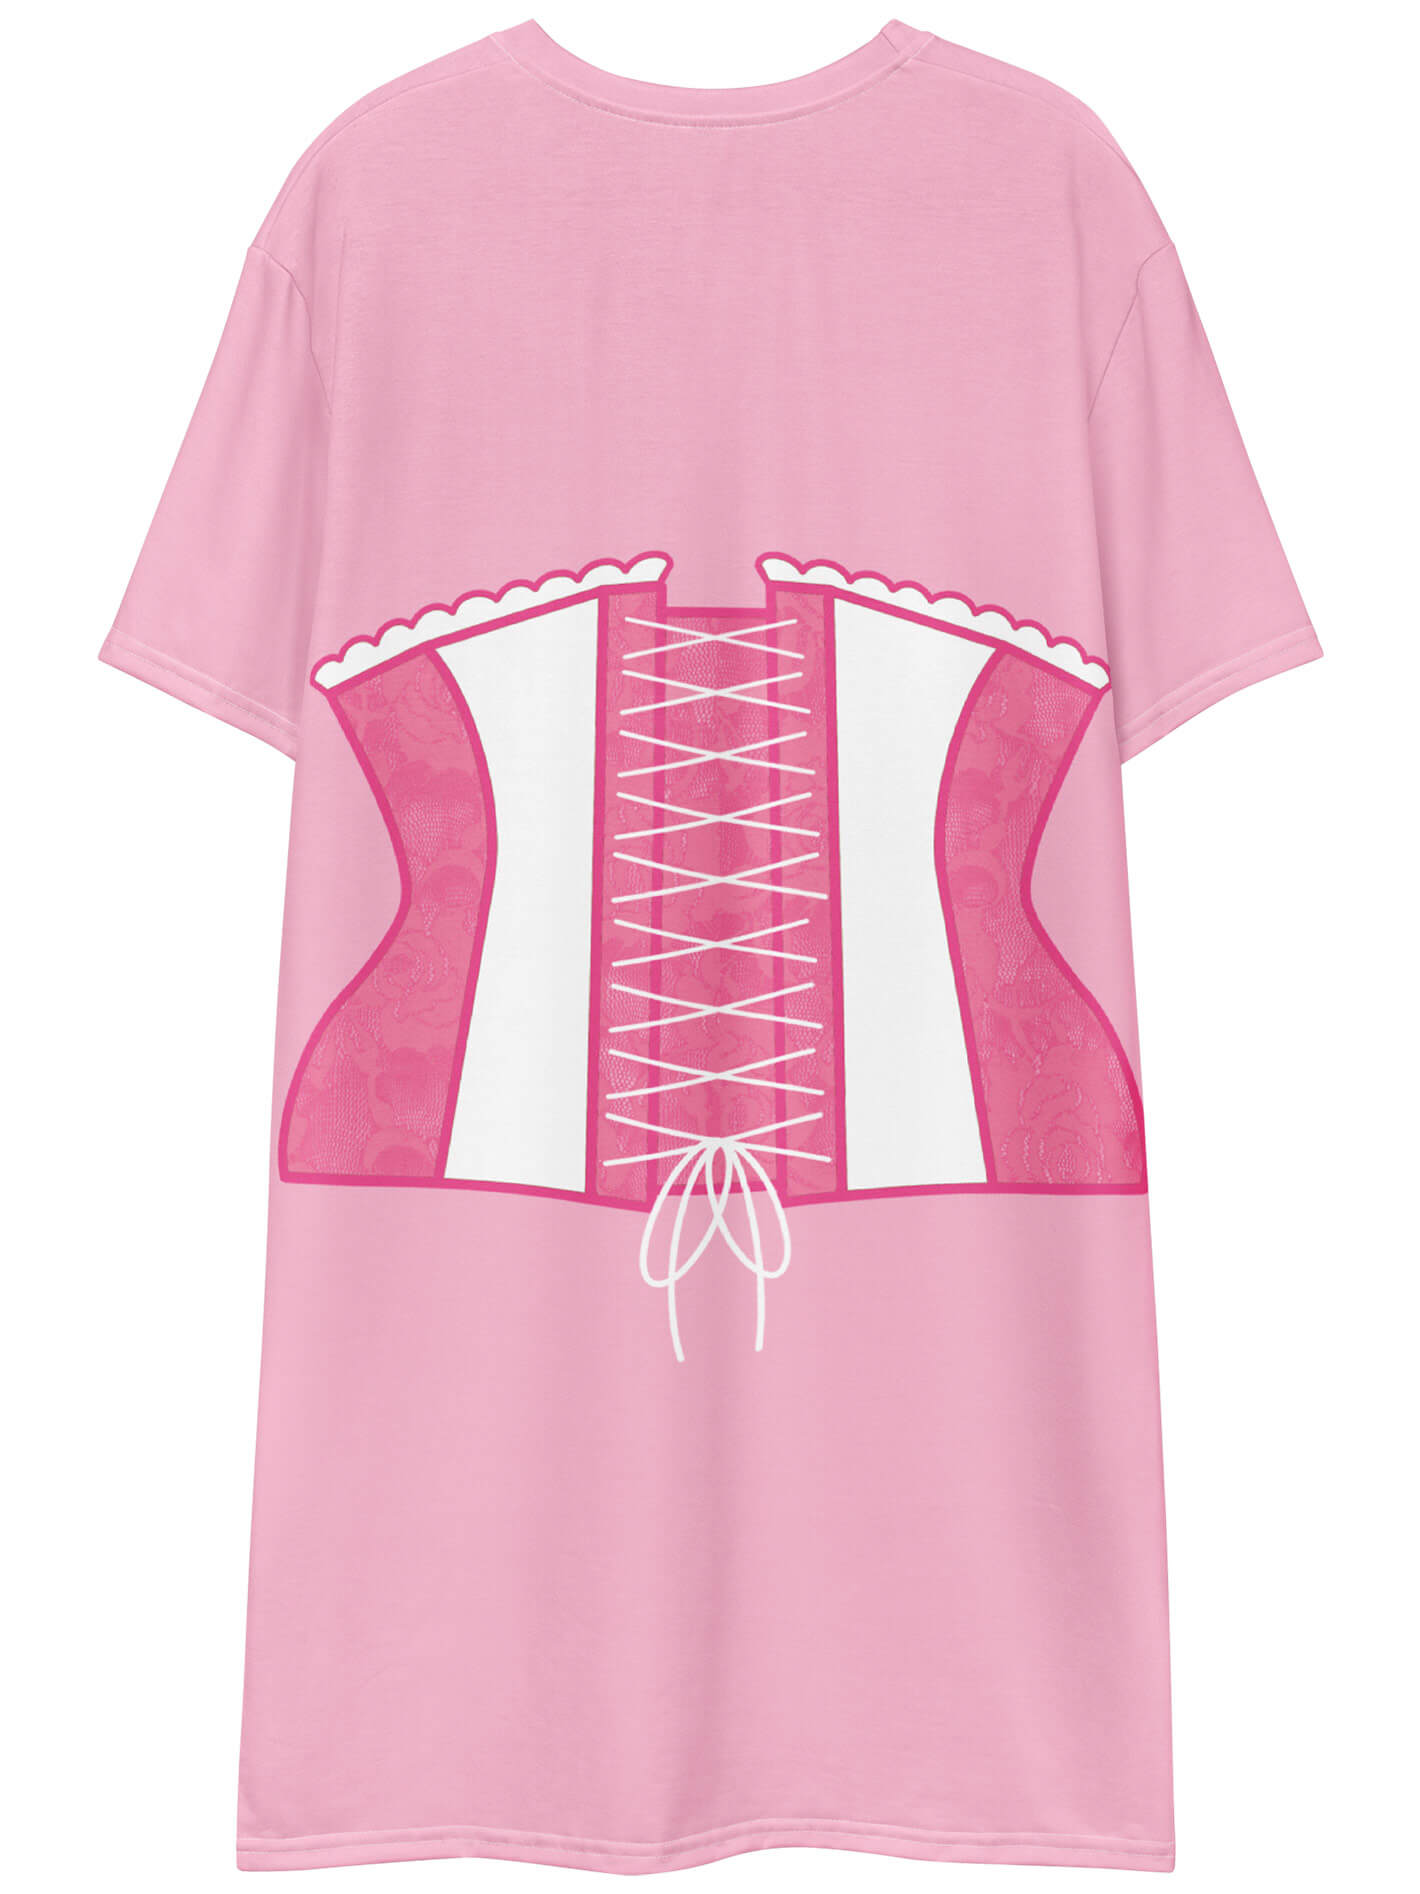 Trashy pink corset shirt dress.